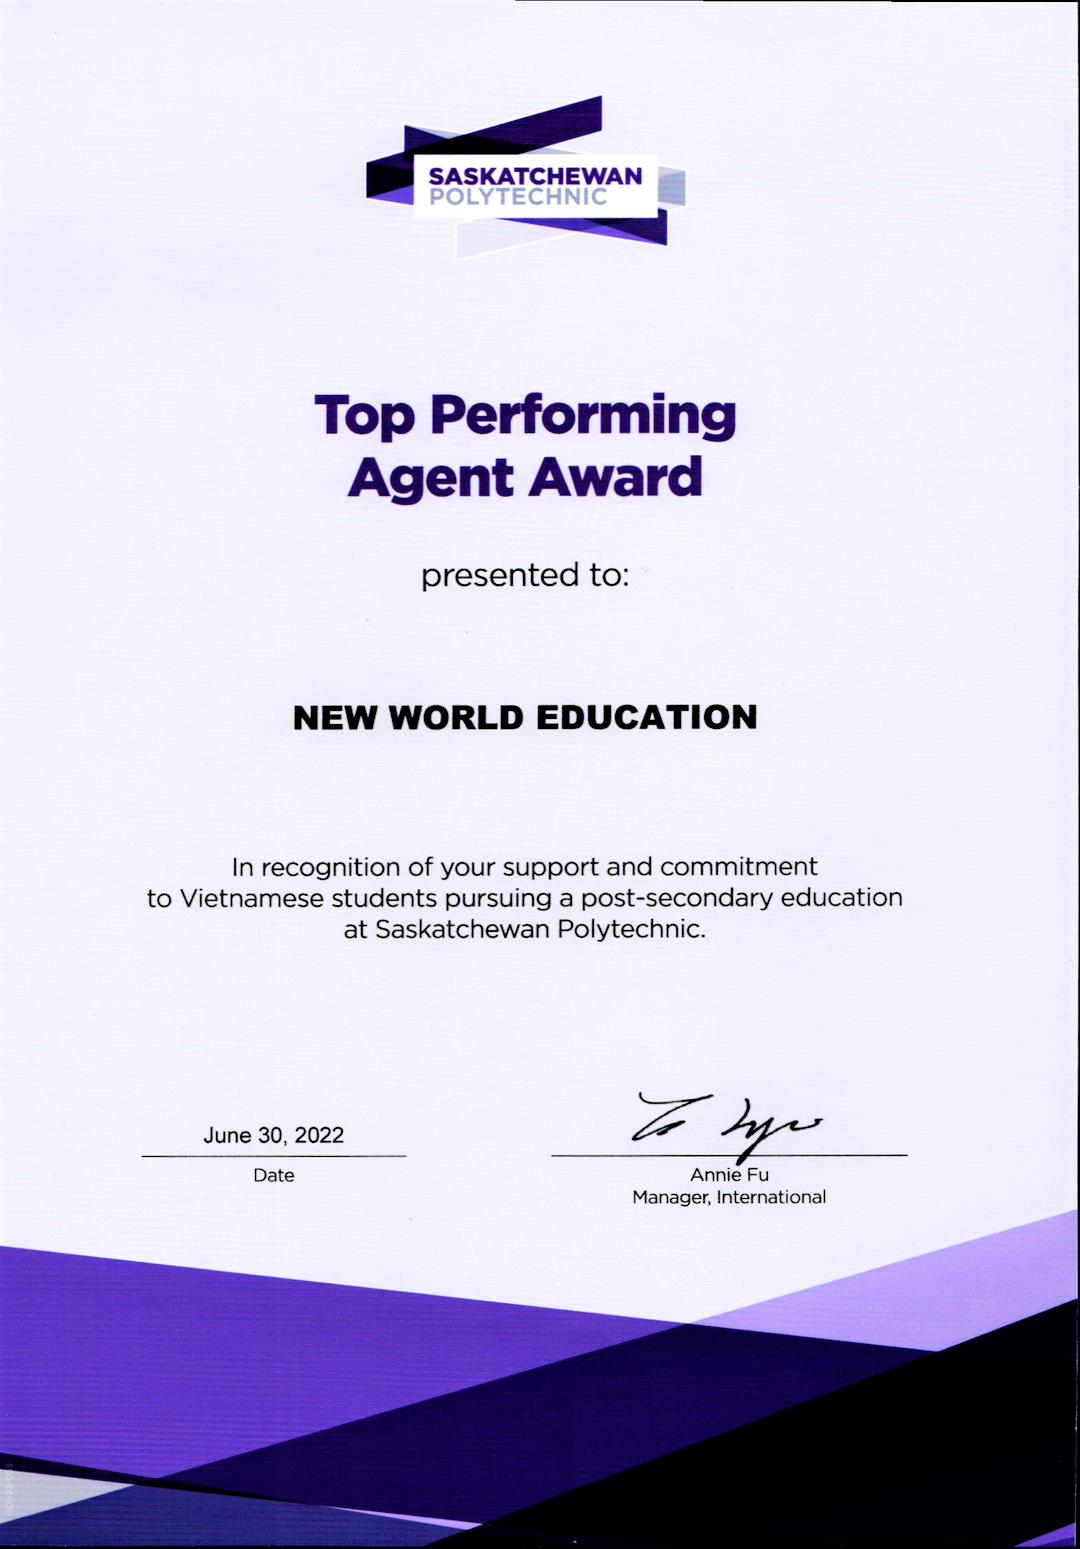 Top Performing Agent Award from Saskatchewan Polytechnic, Canada